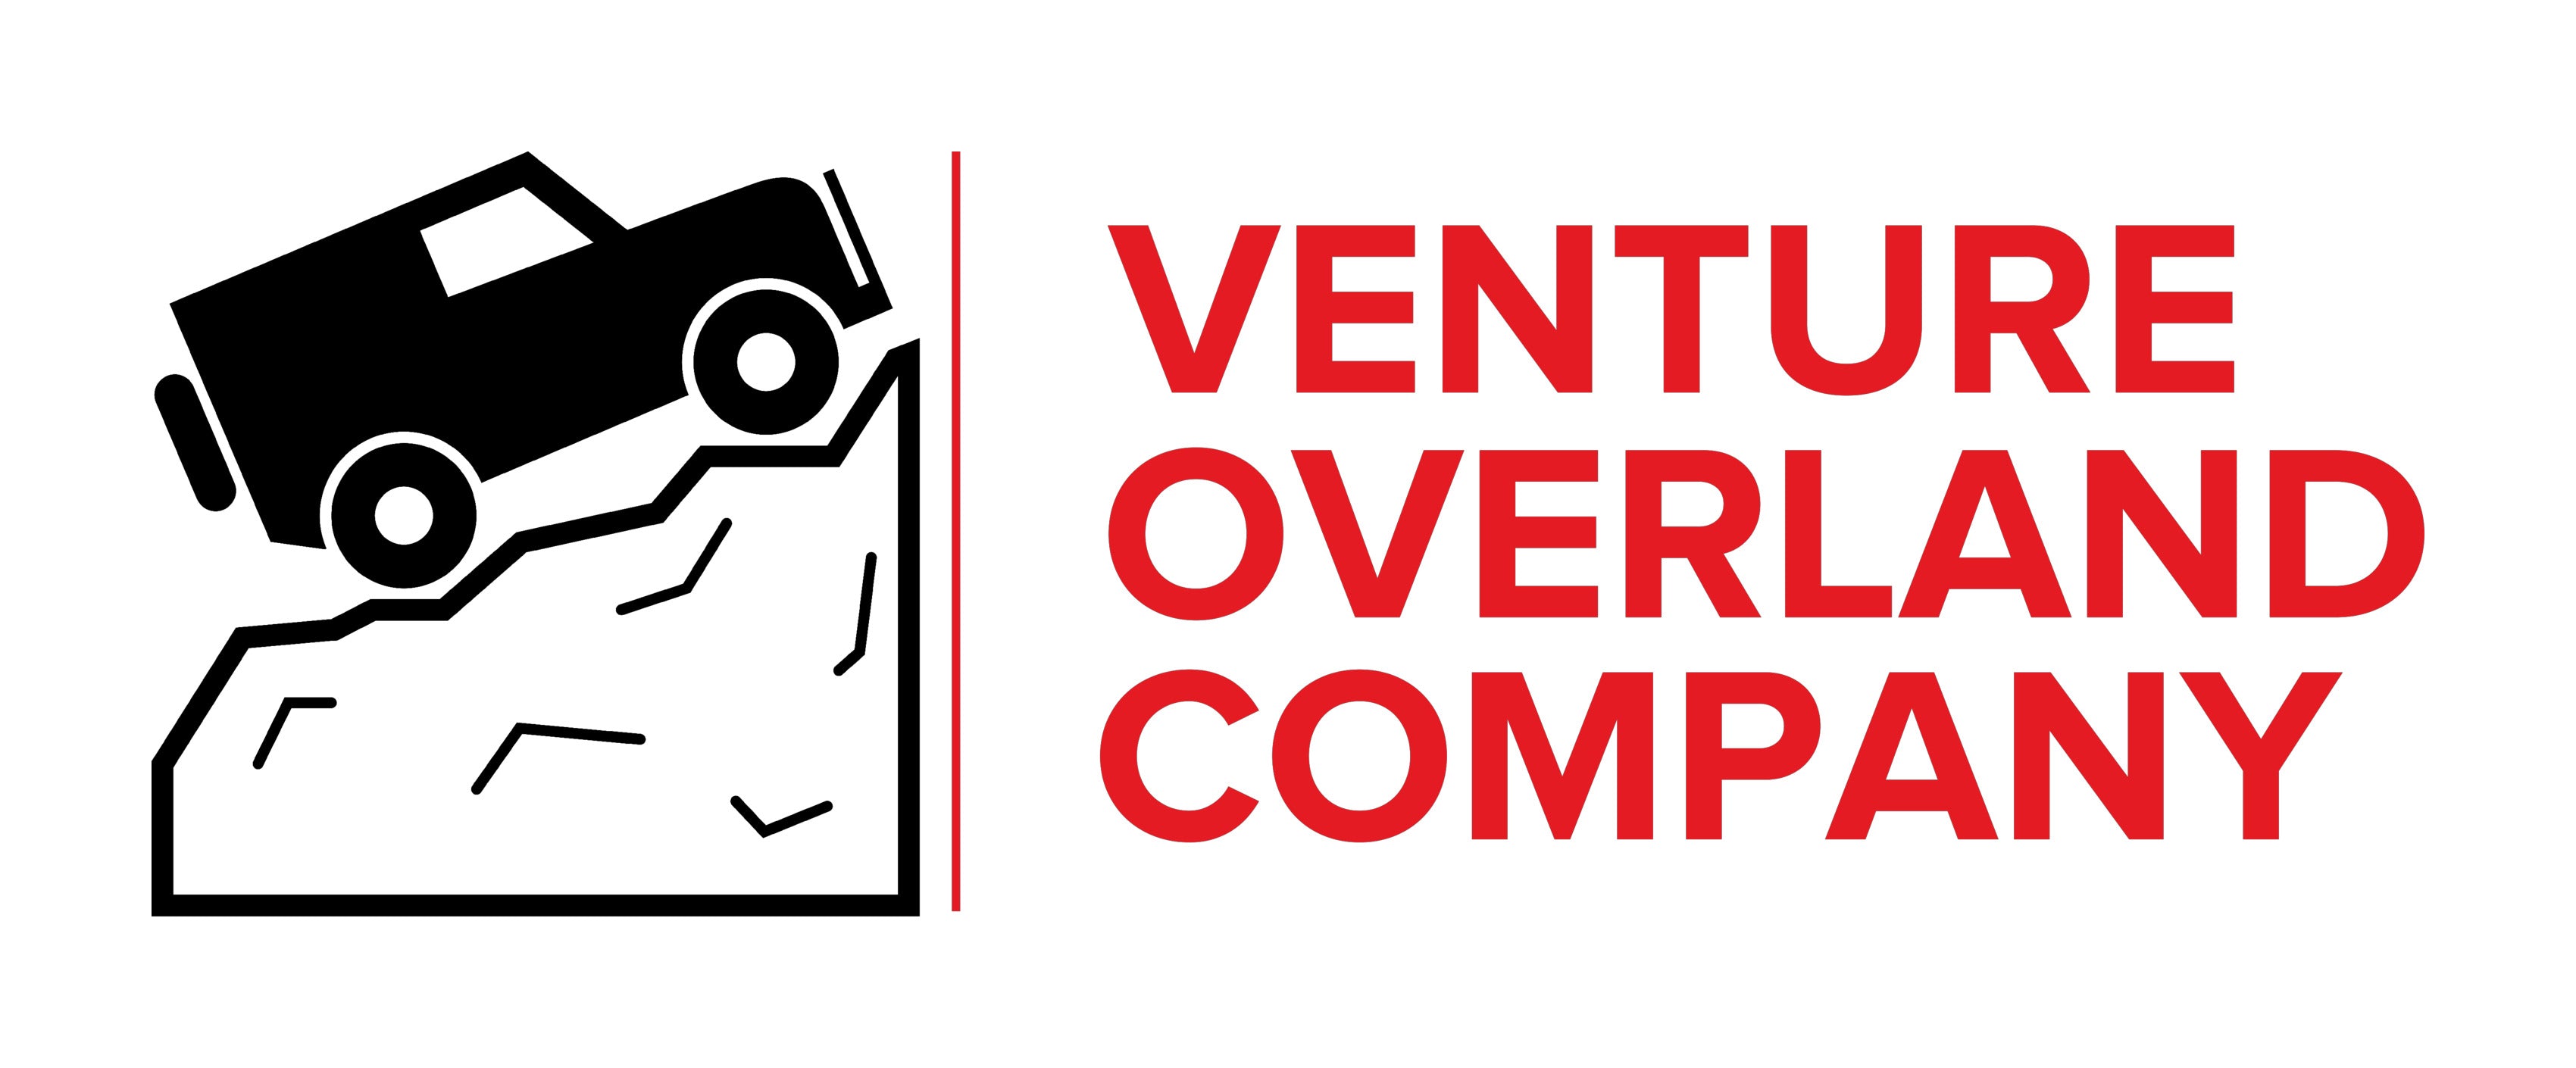 Venture Overland Company Logo